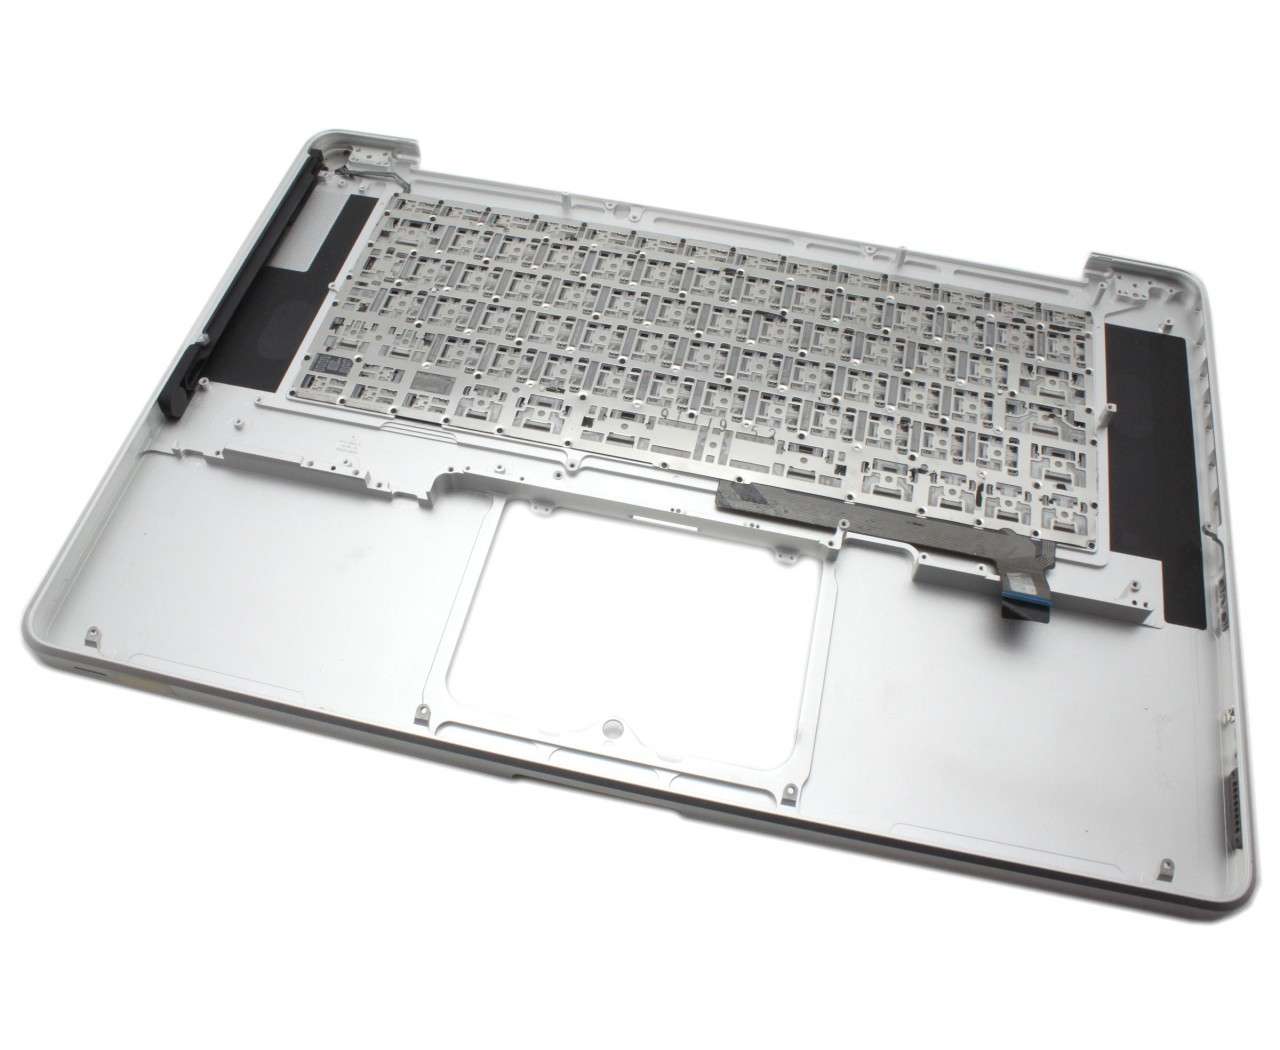 Tastatura Apple MacBook Pro 15 MB471LL A Neagra cu Palmrest Argintiu Refurbished Apple Apple